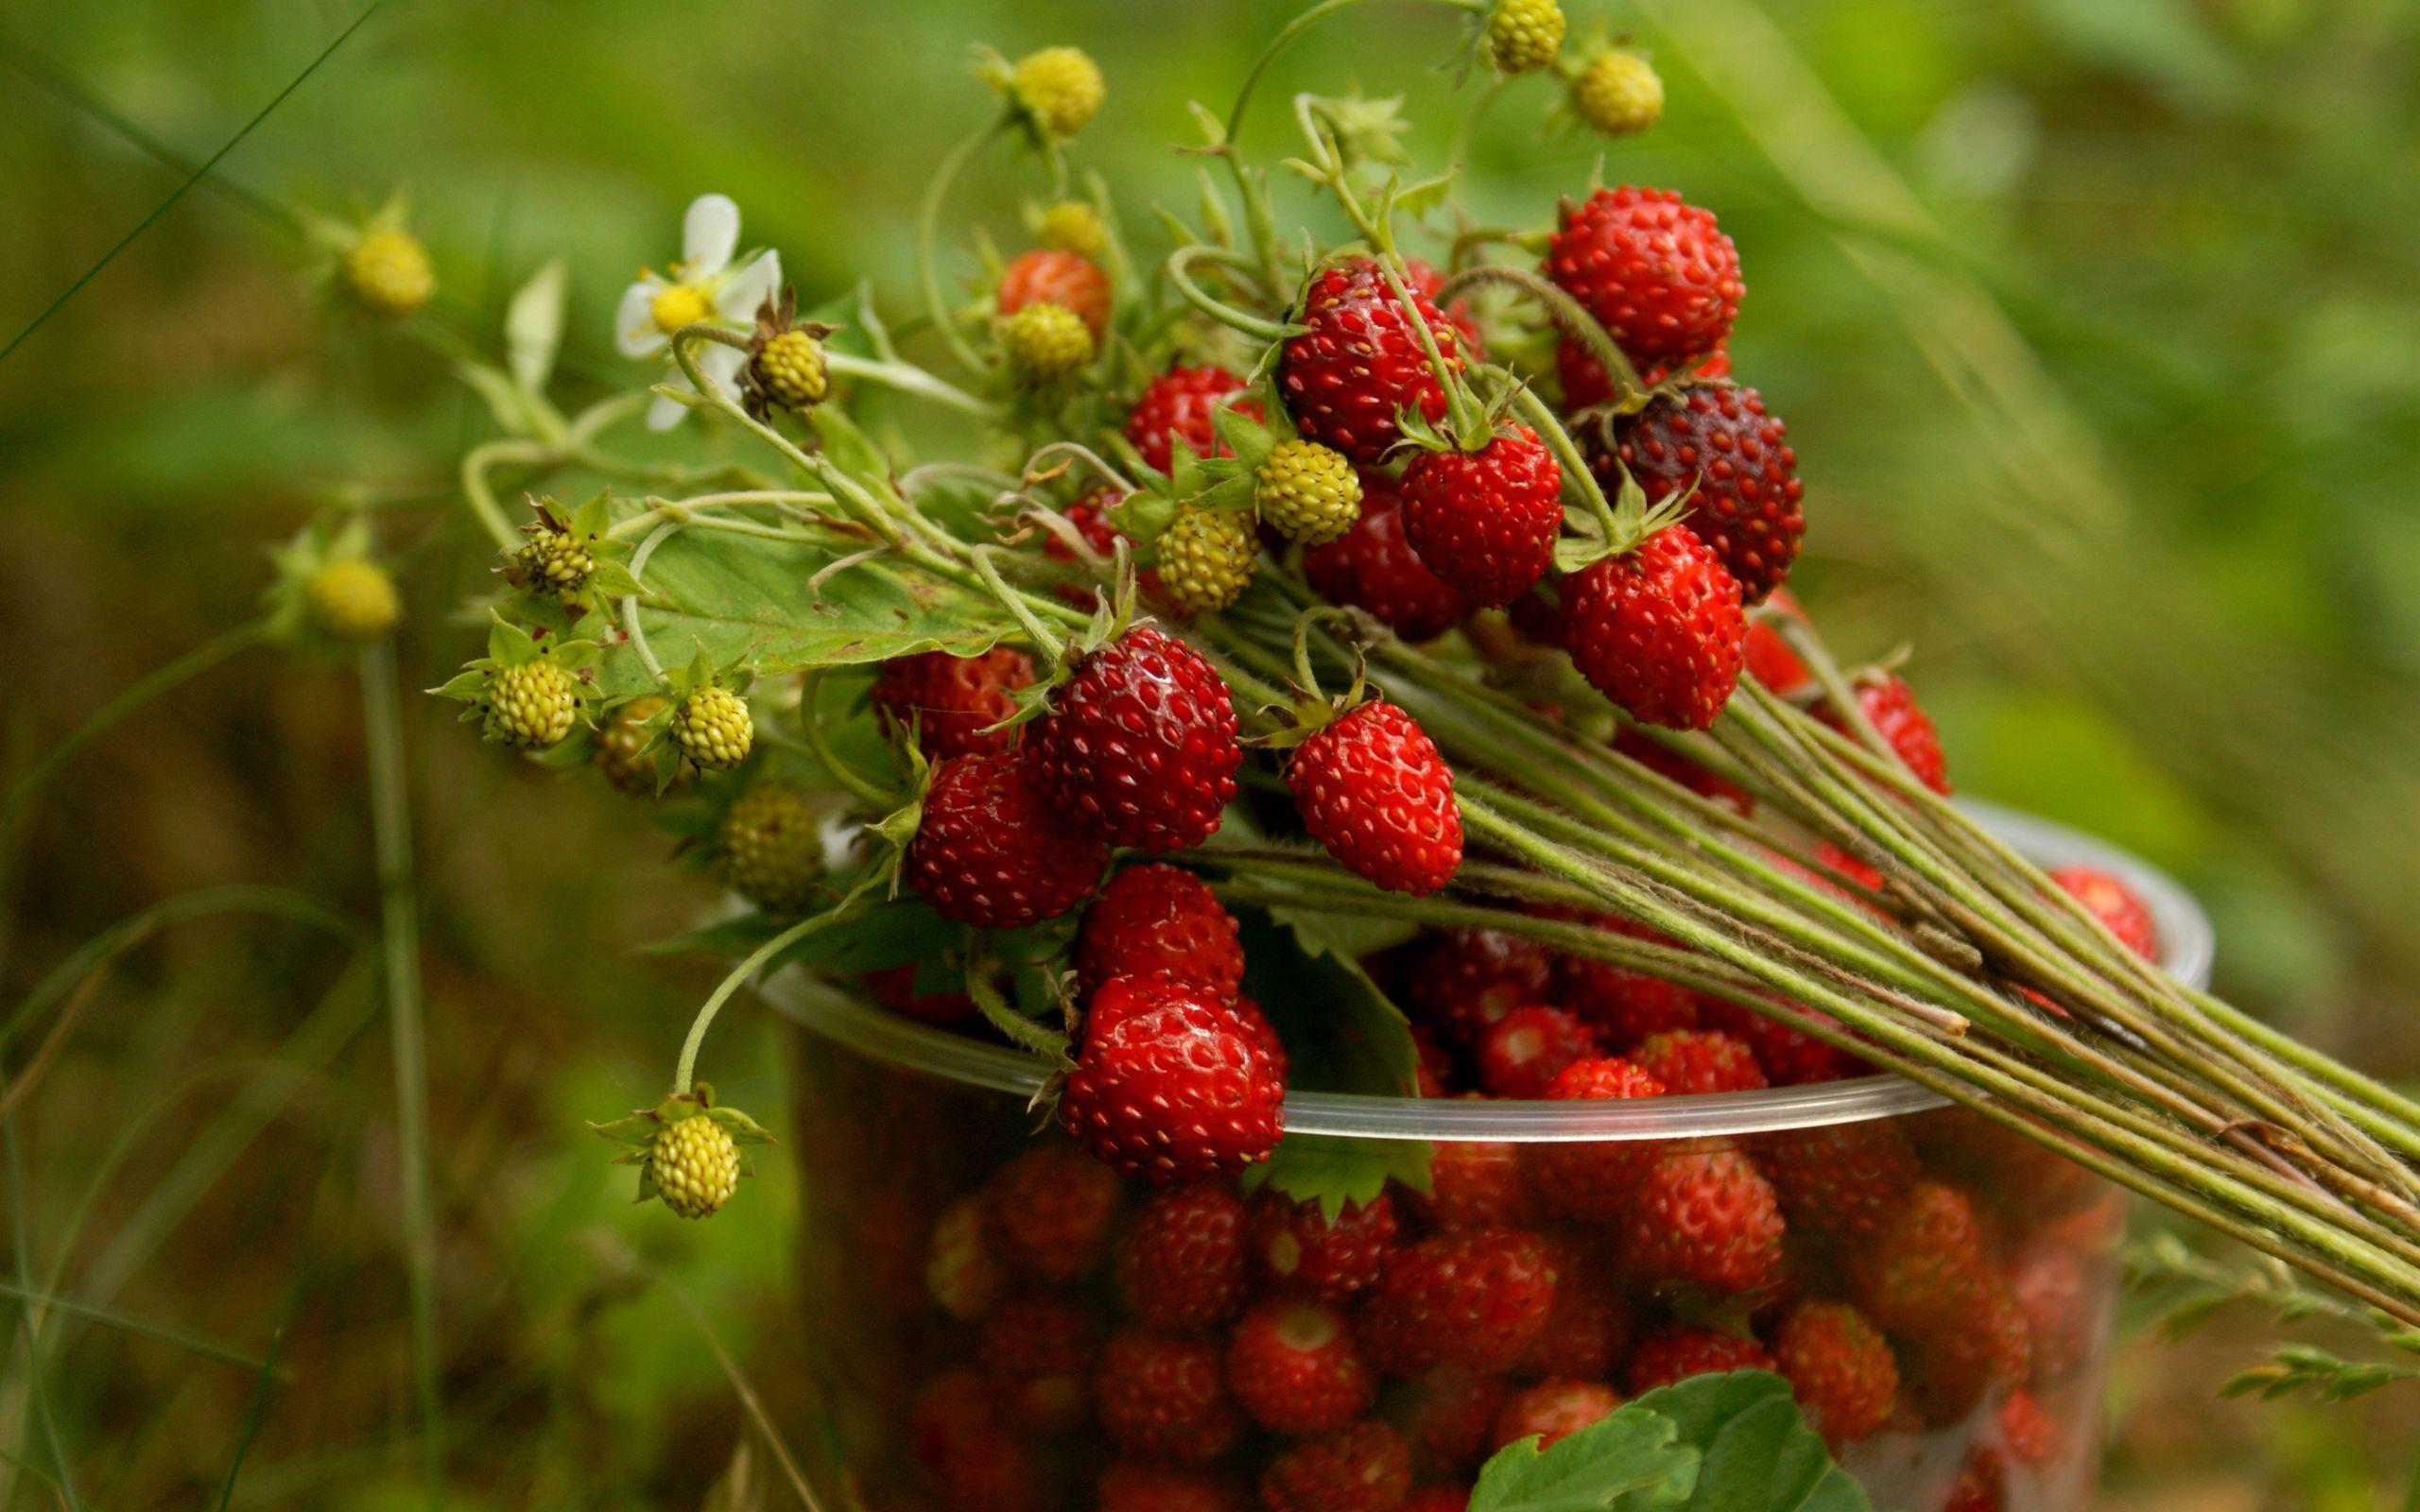 Strawberry Desktop Wallpaper. Strawberries Fruit Image. Cool